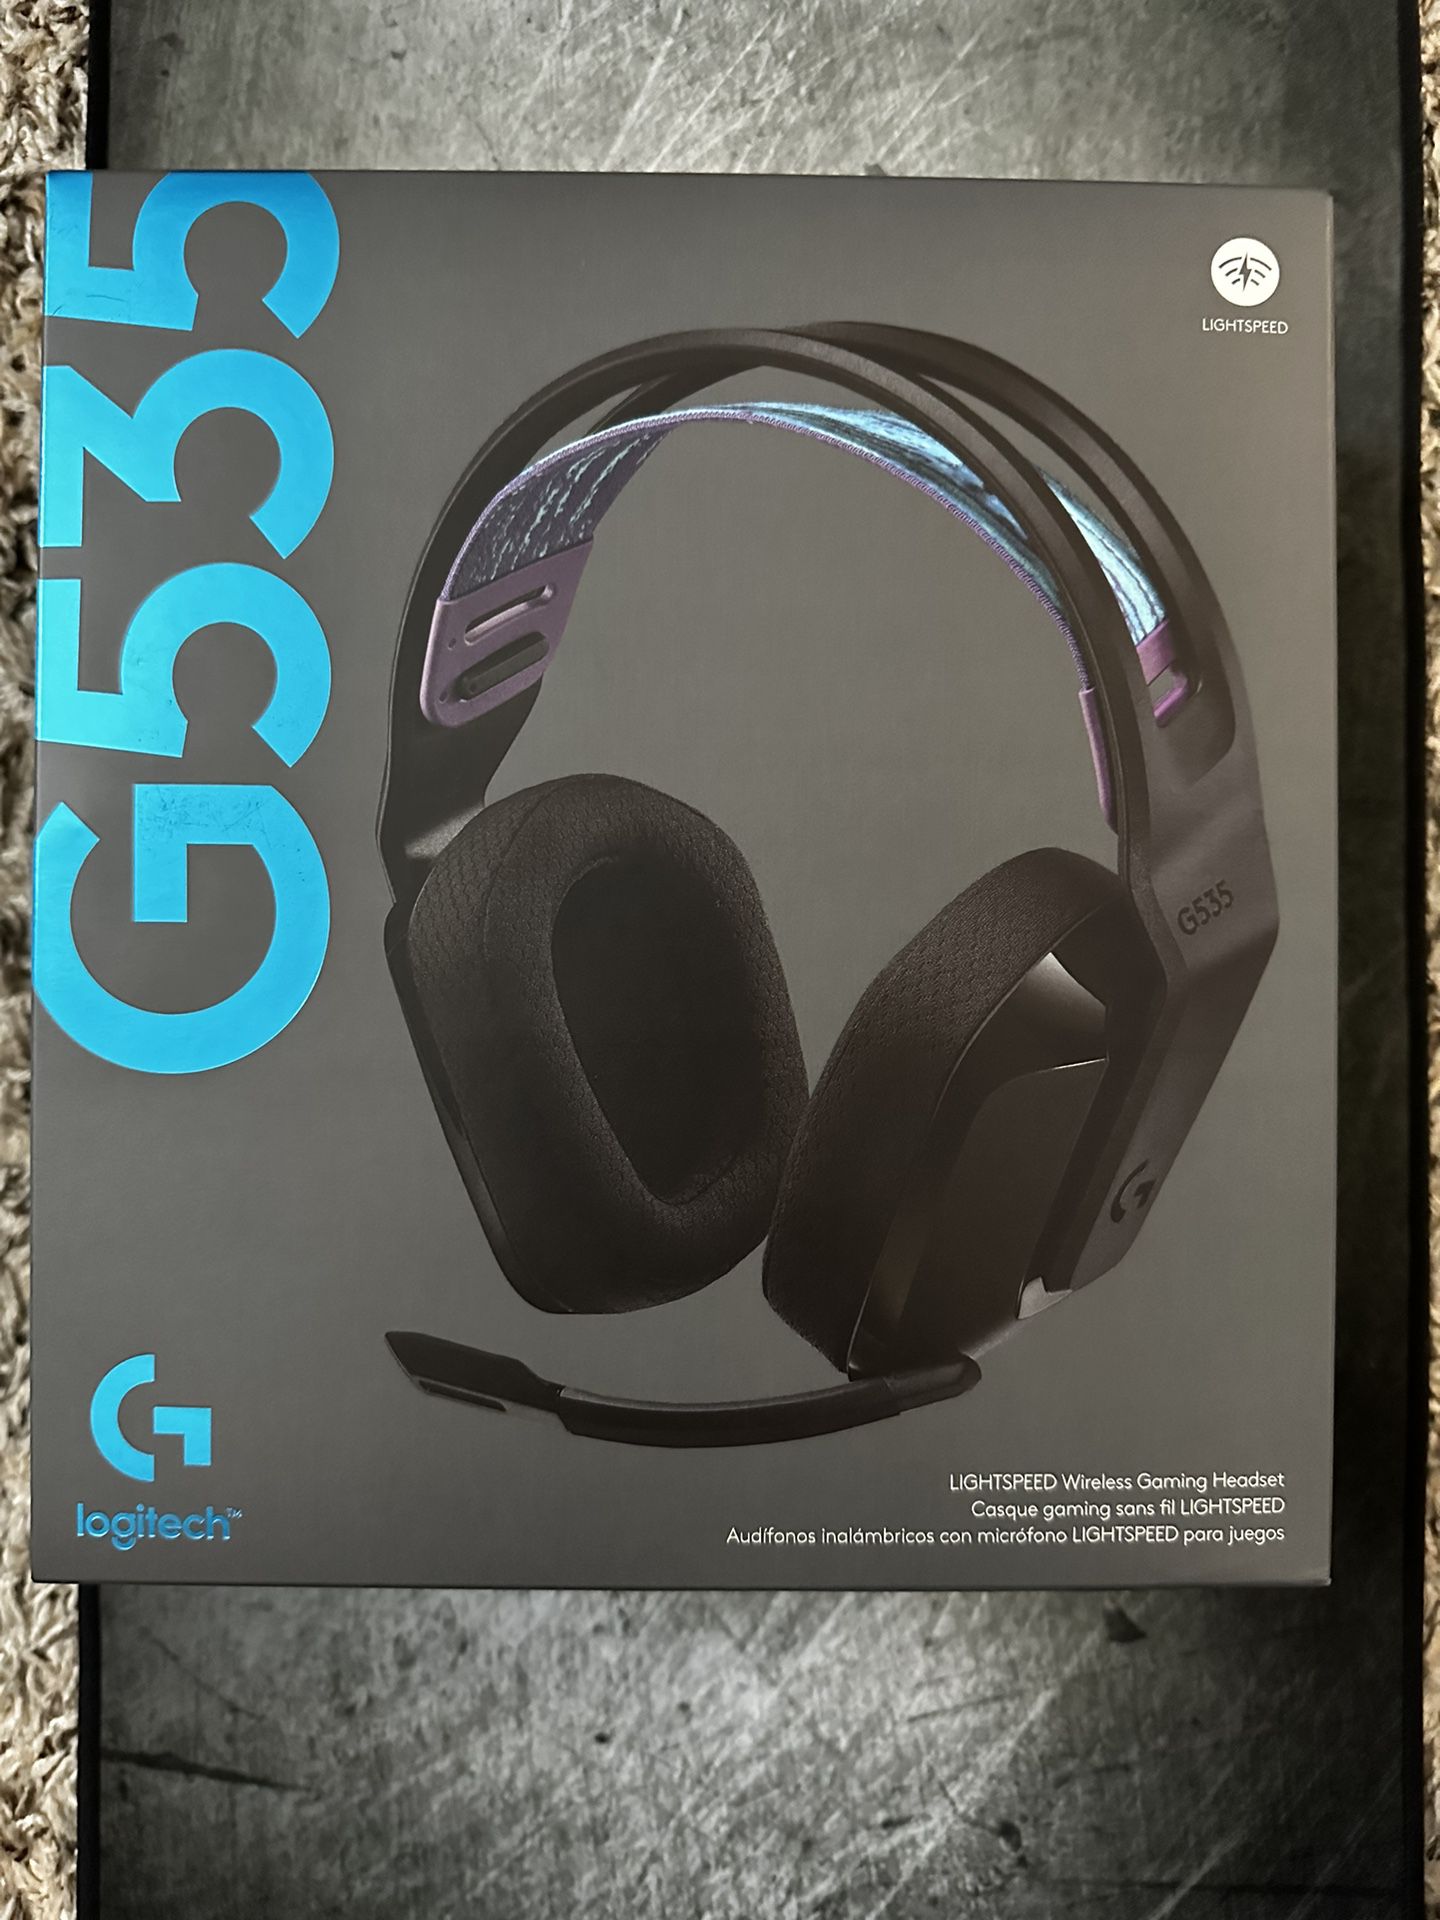 Logitech G535 Wireless Gaming Headset